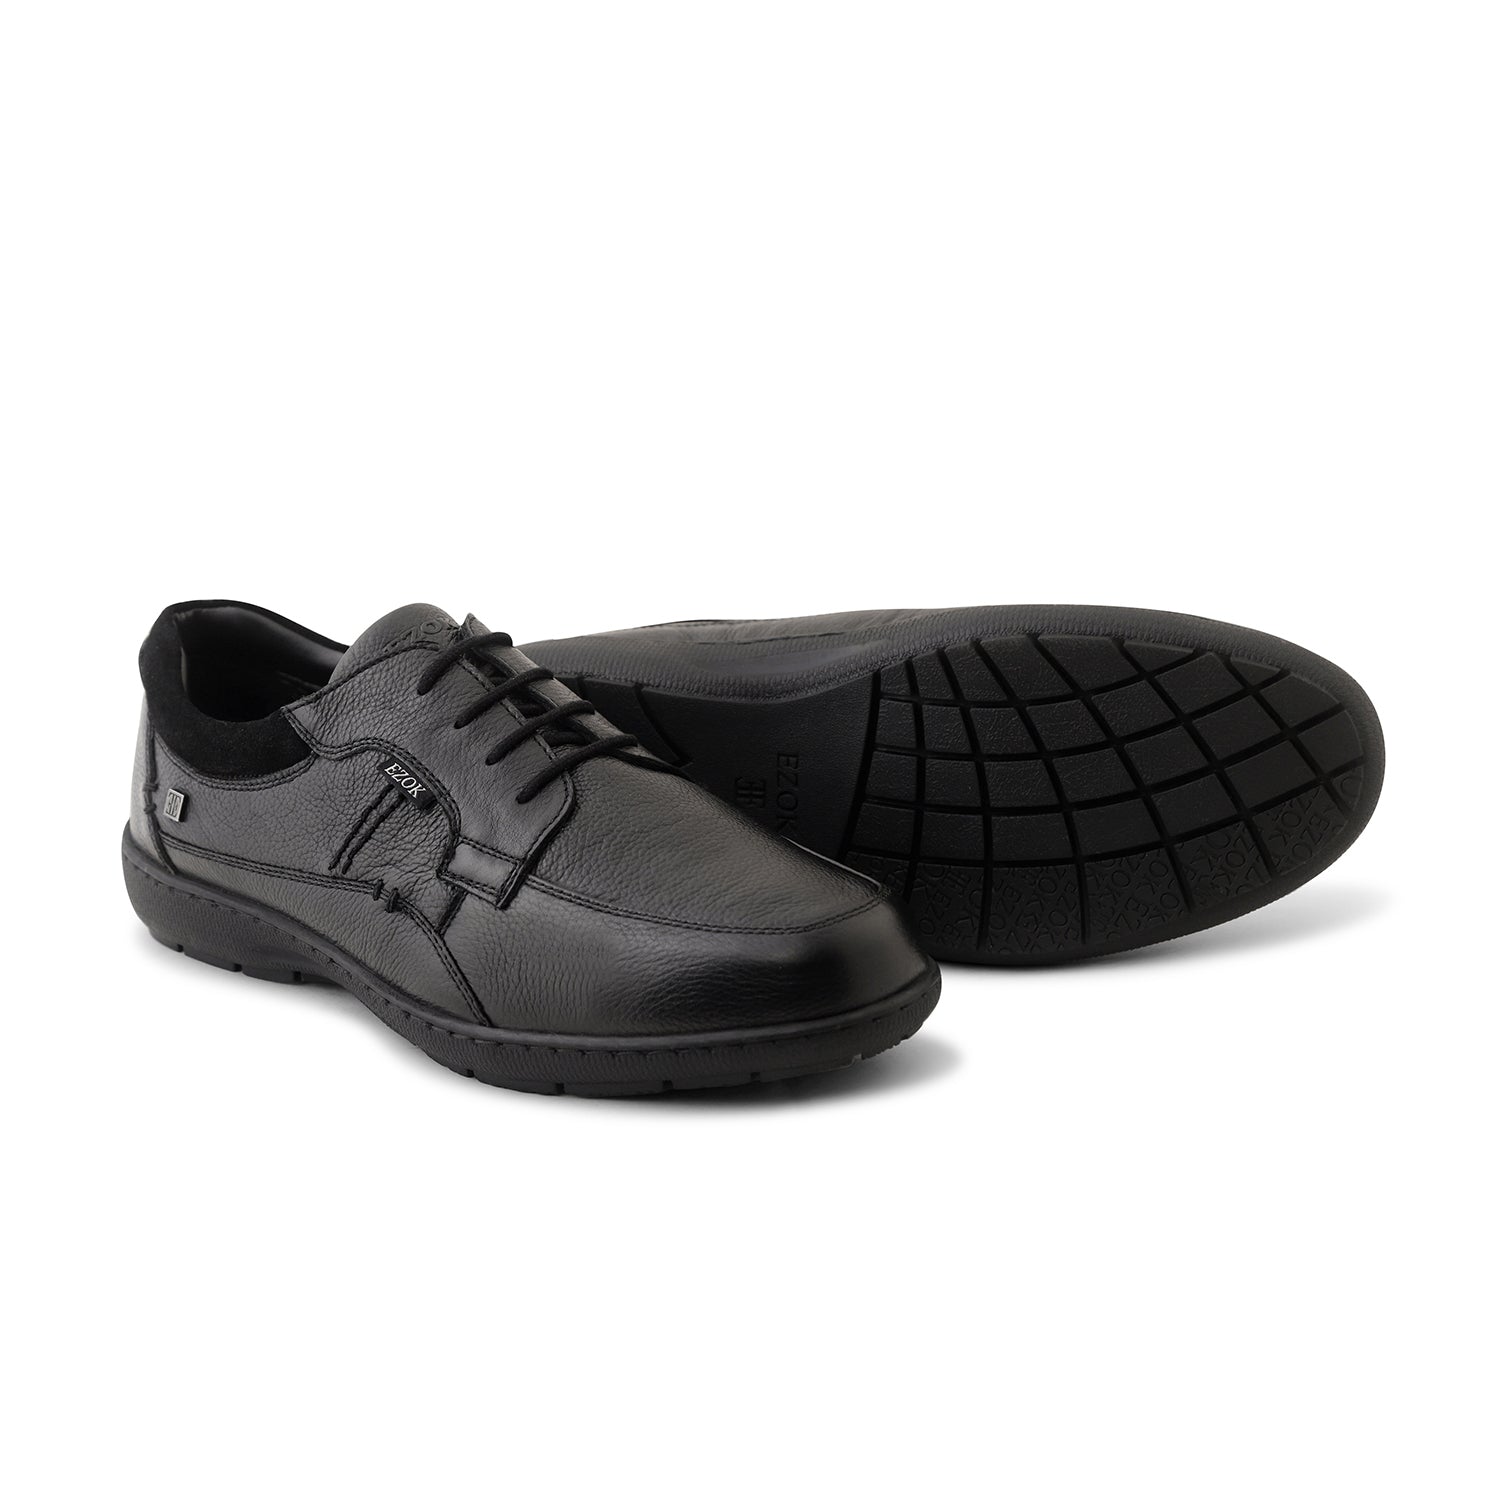 Ezok Black Outdoor Lace-Up Leather Shoes